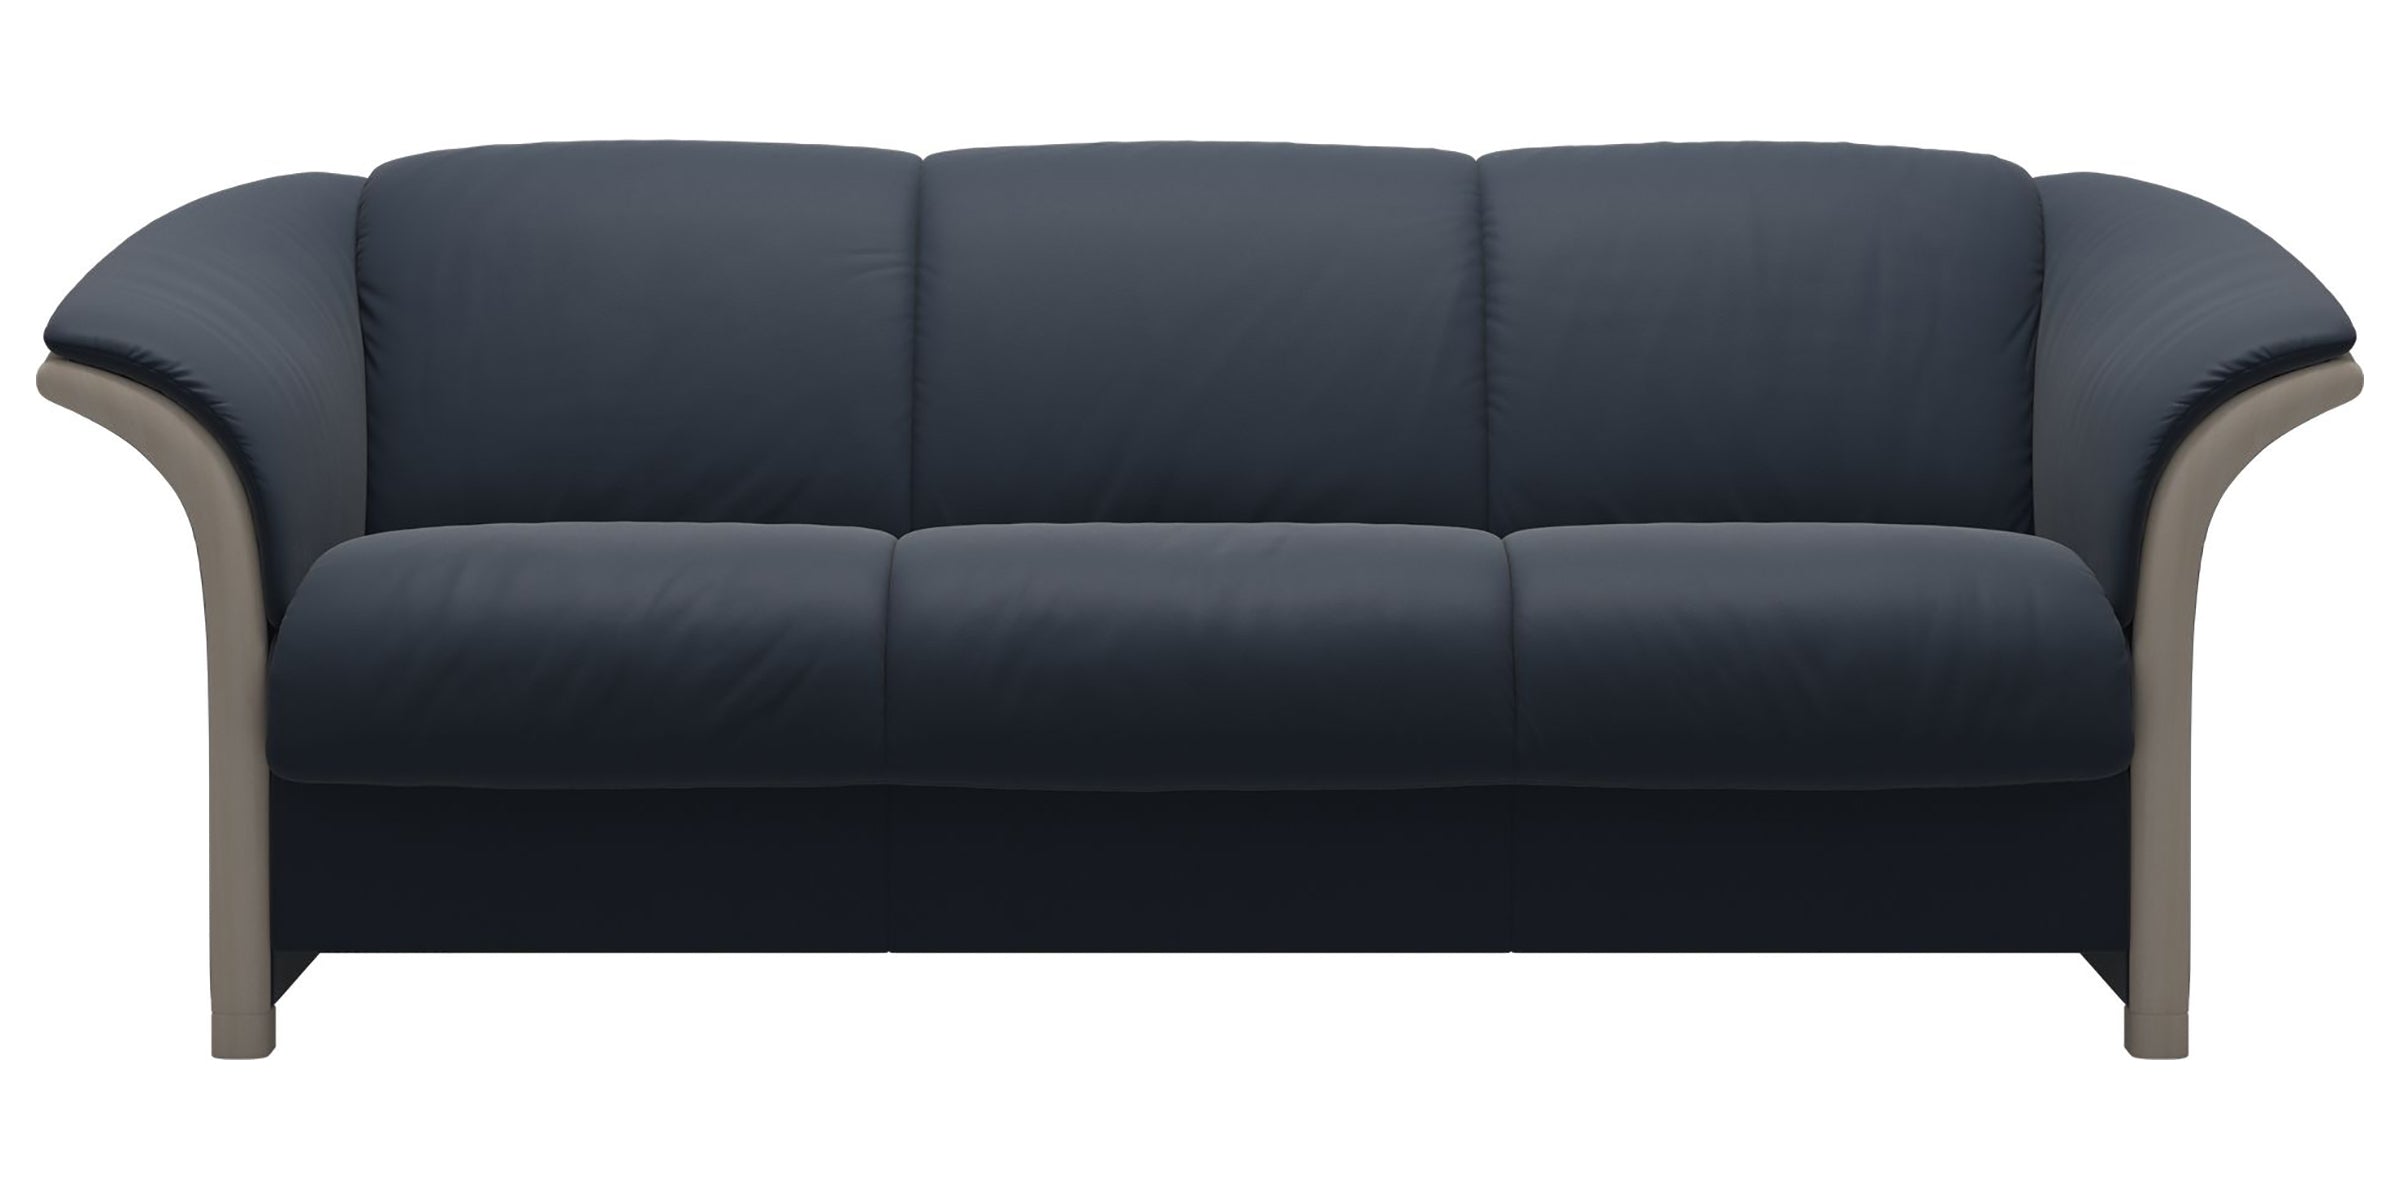 Paloma Leather Oxford Blue and Whitewash Arm Trim | Stressless Manhattan Sofa | Valley Ridge Furniture